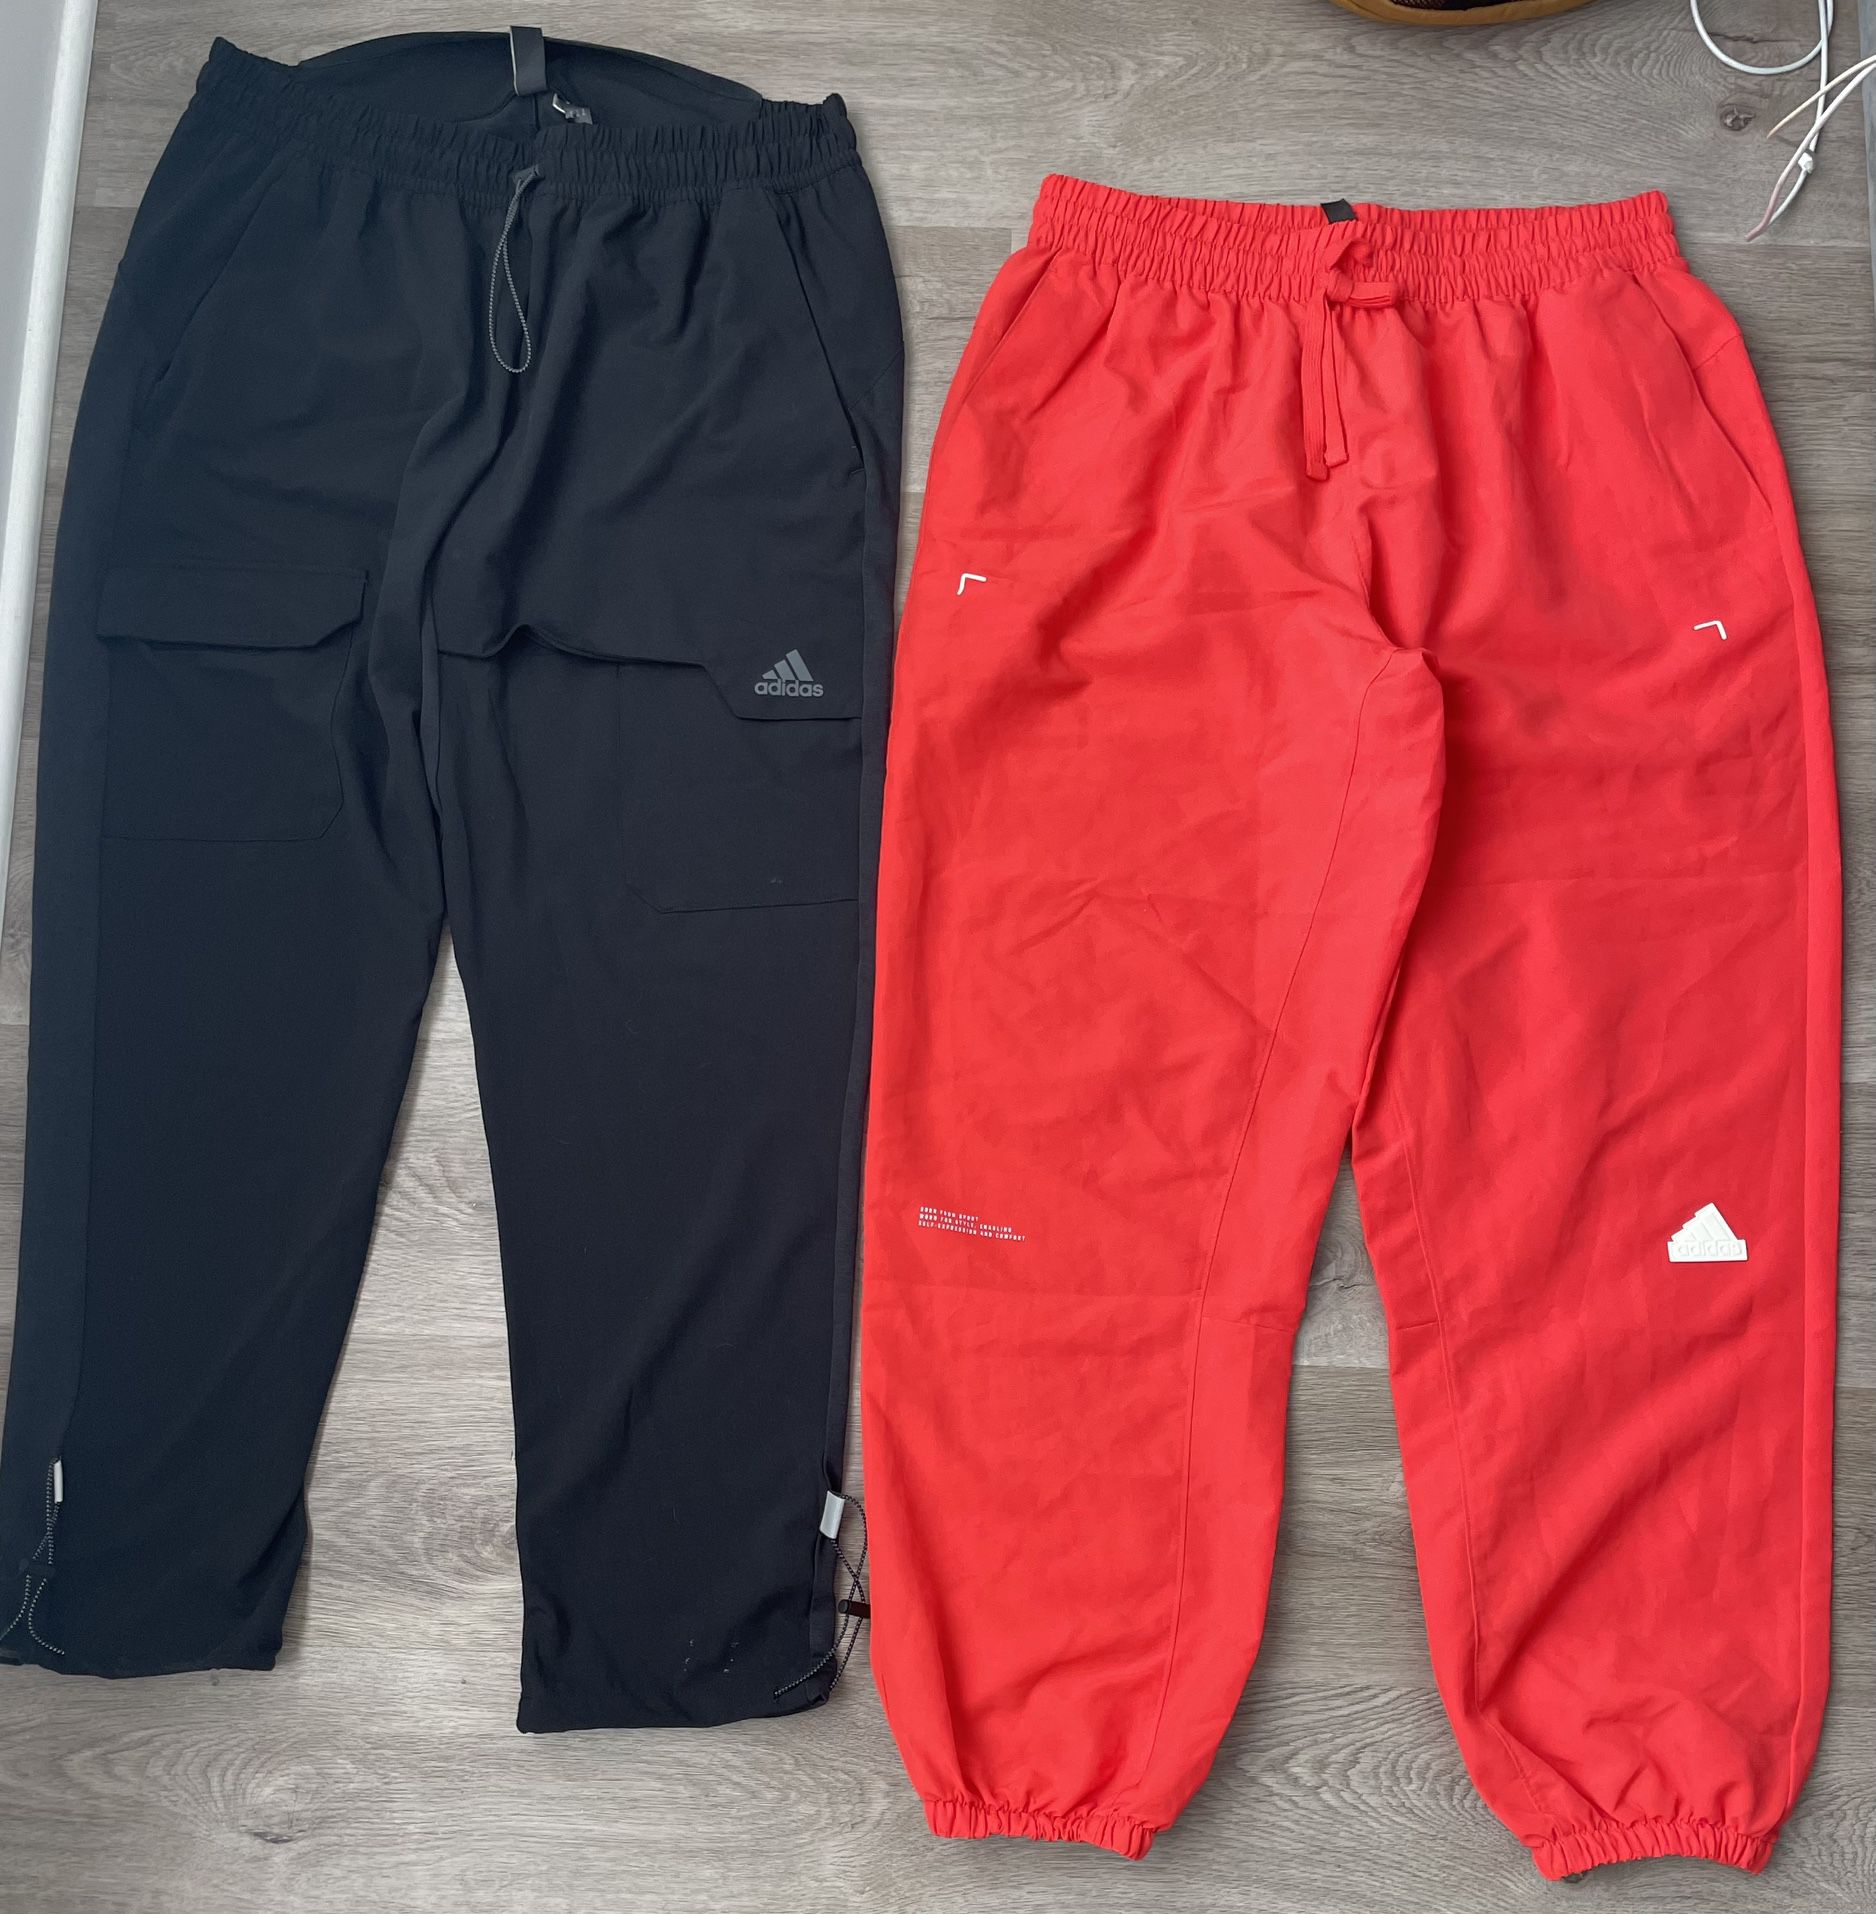 Adidas Activewear Pants